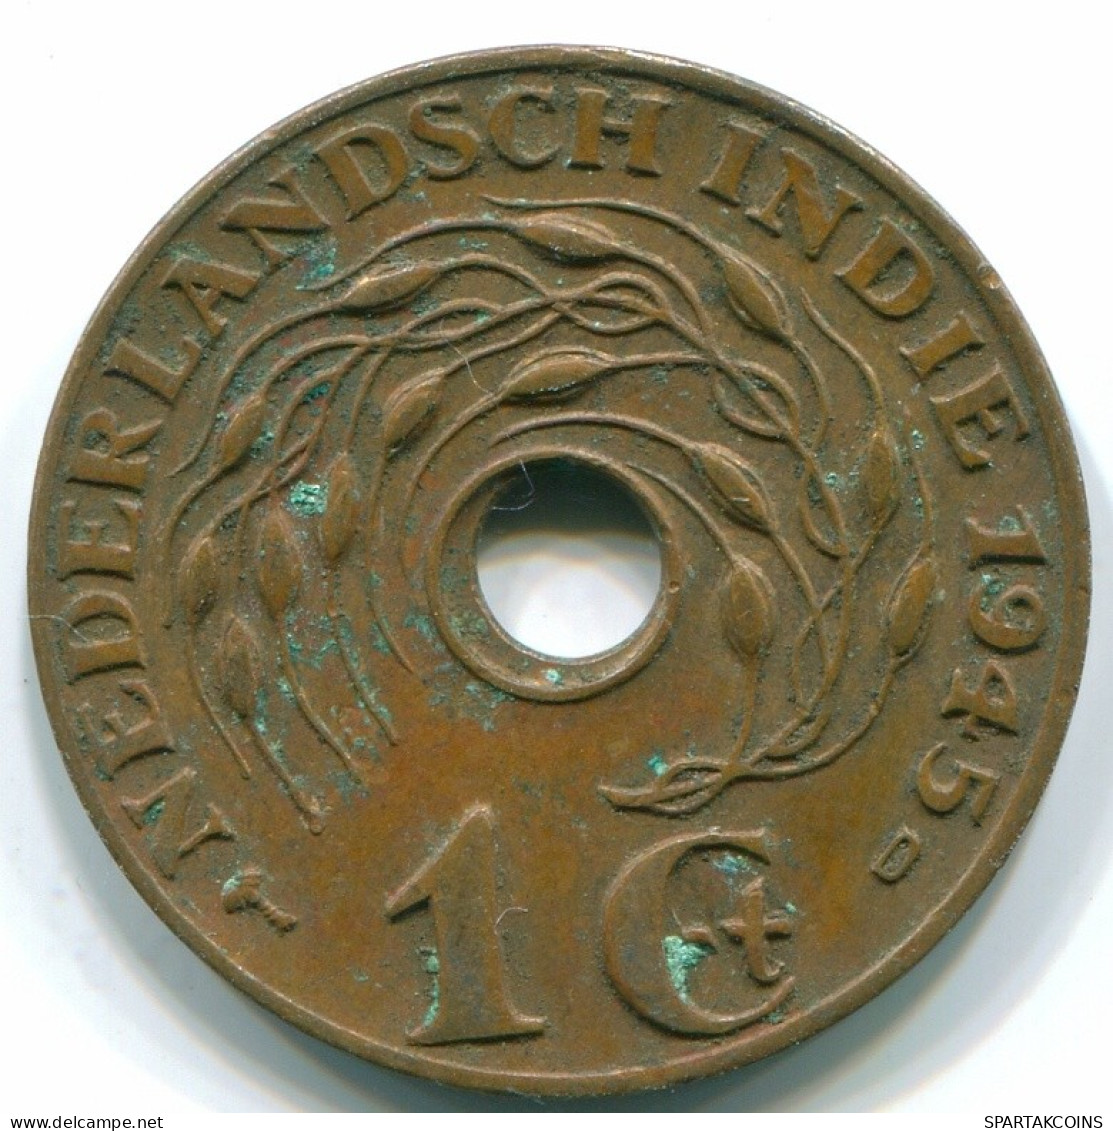 1 CENT 1945 D NIEDERLANDE OSTINDIEN INDONESISCH Koloniale Münze #S10383.D.A - Indes Néerlandaises